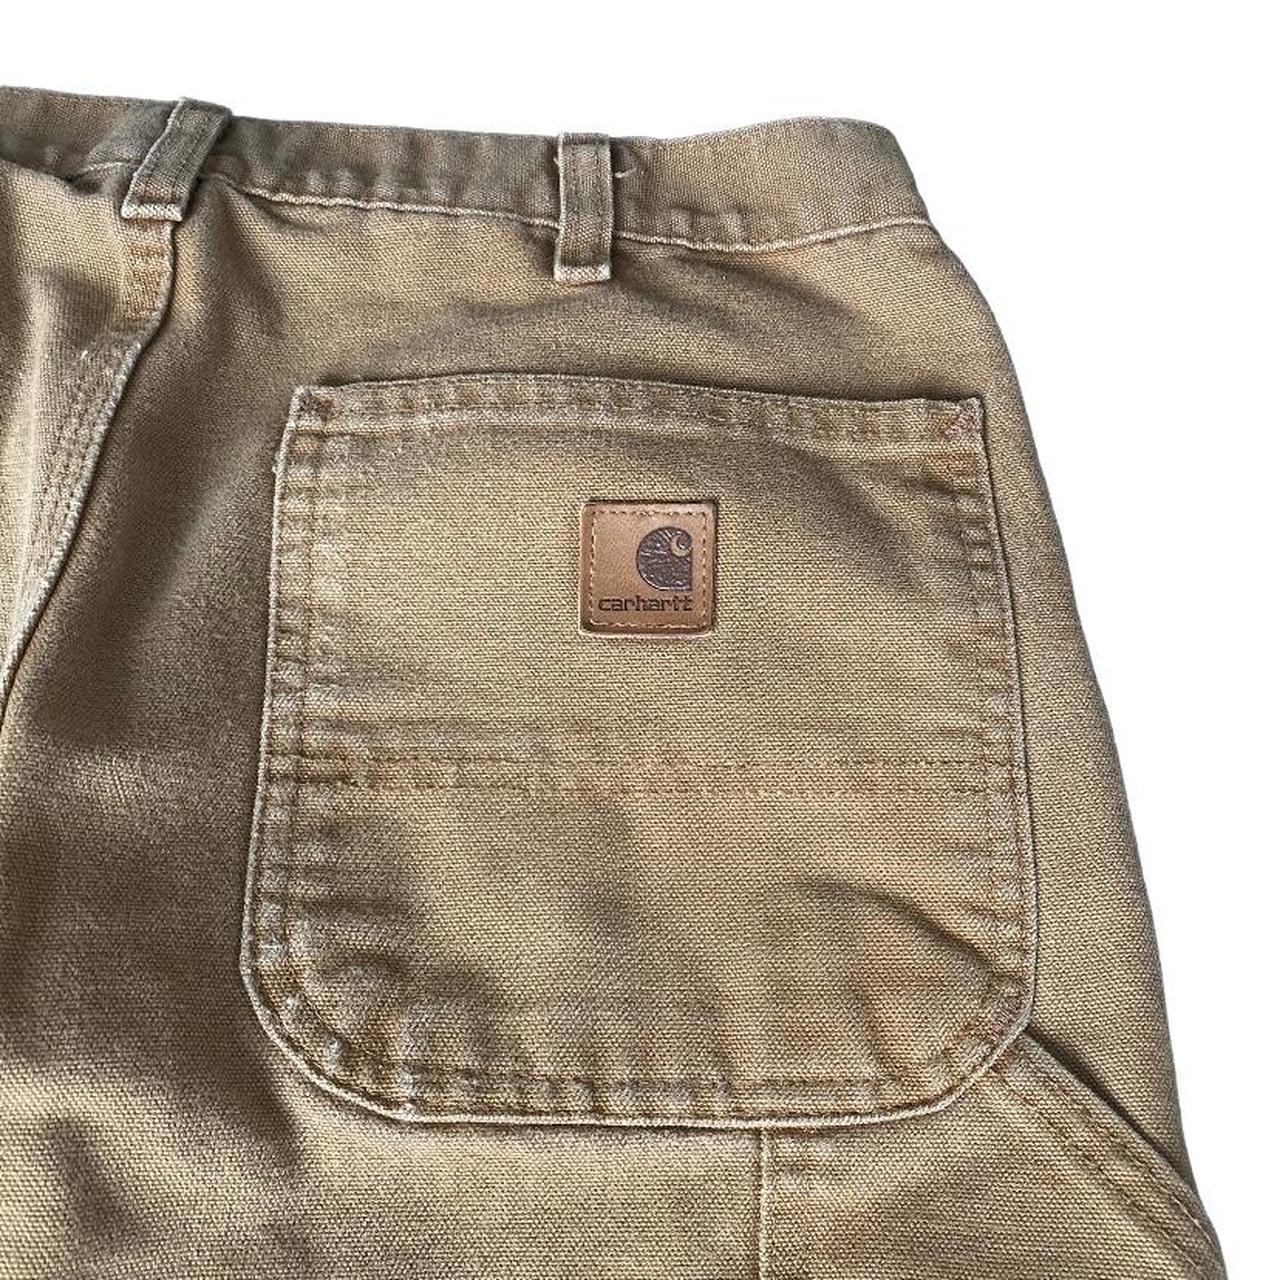 Vintage Carhartt Pants Size 32x32 #depop... - Depop